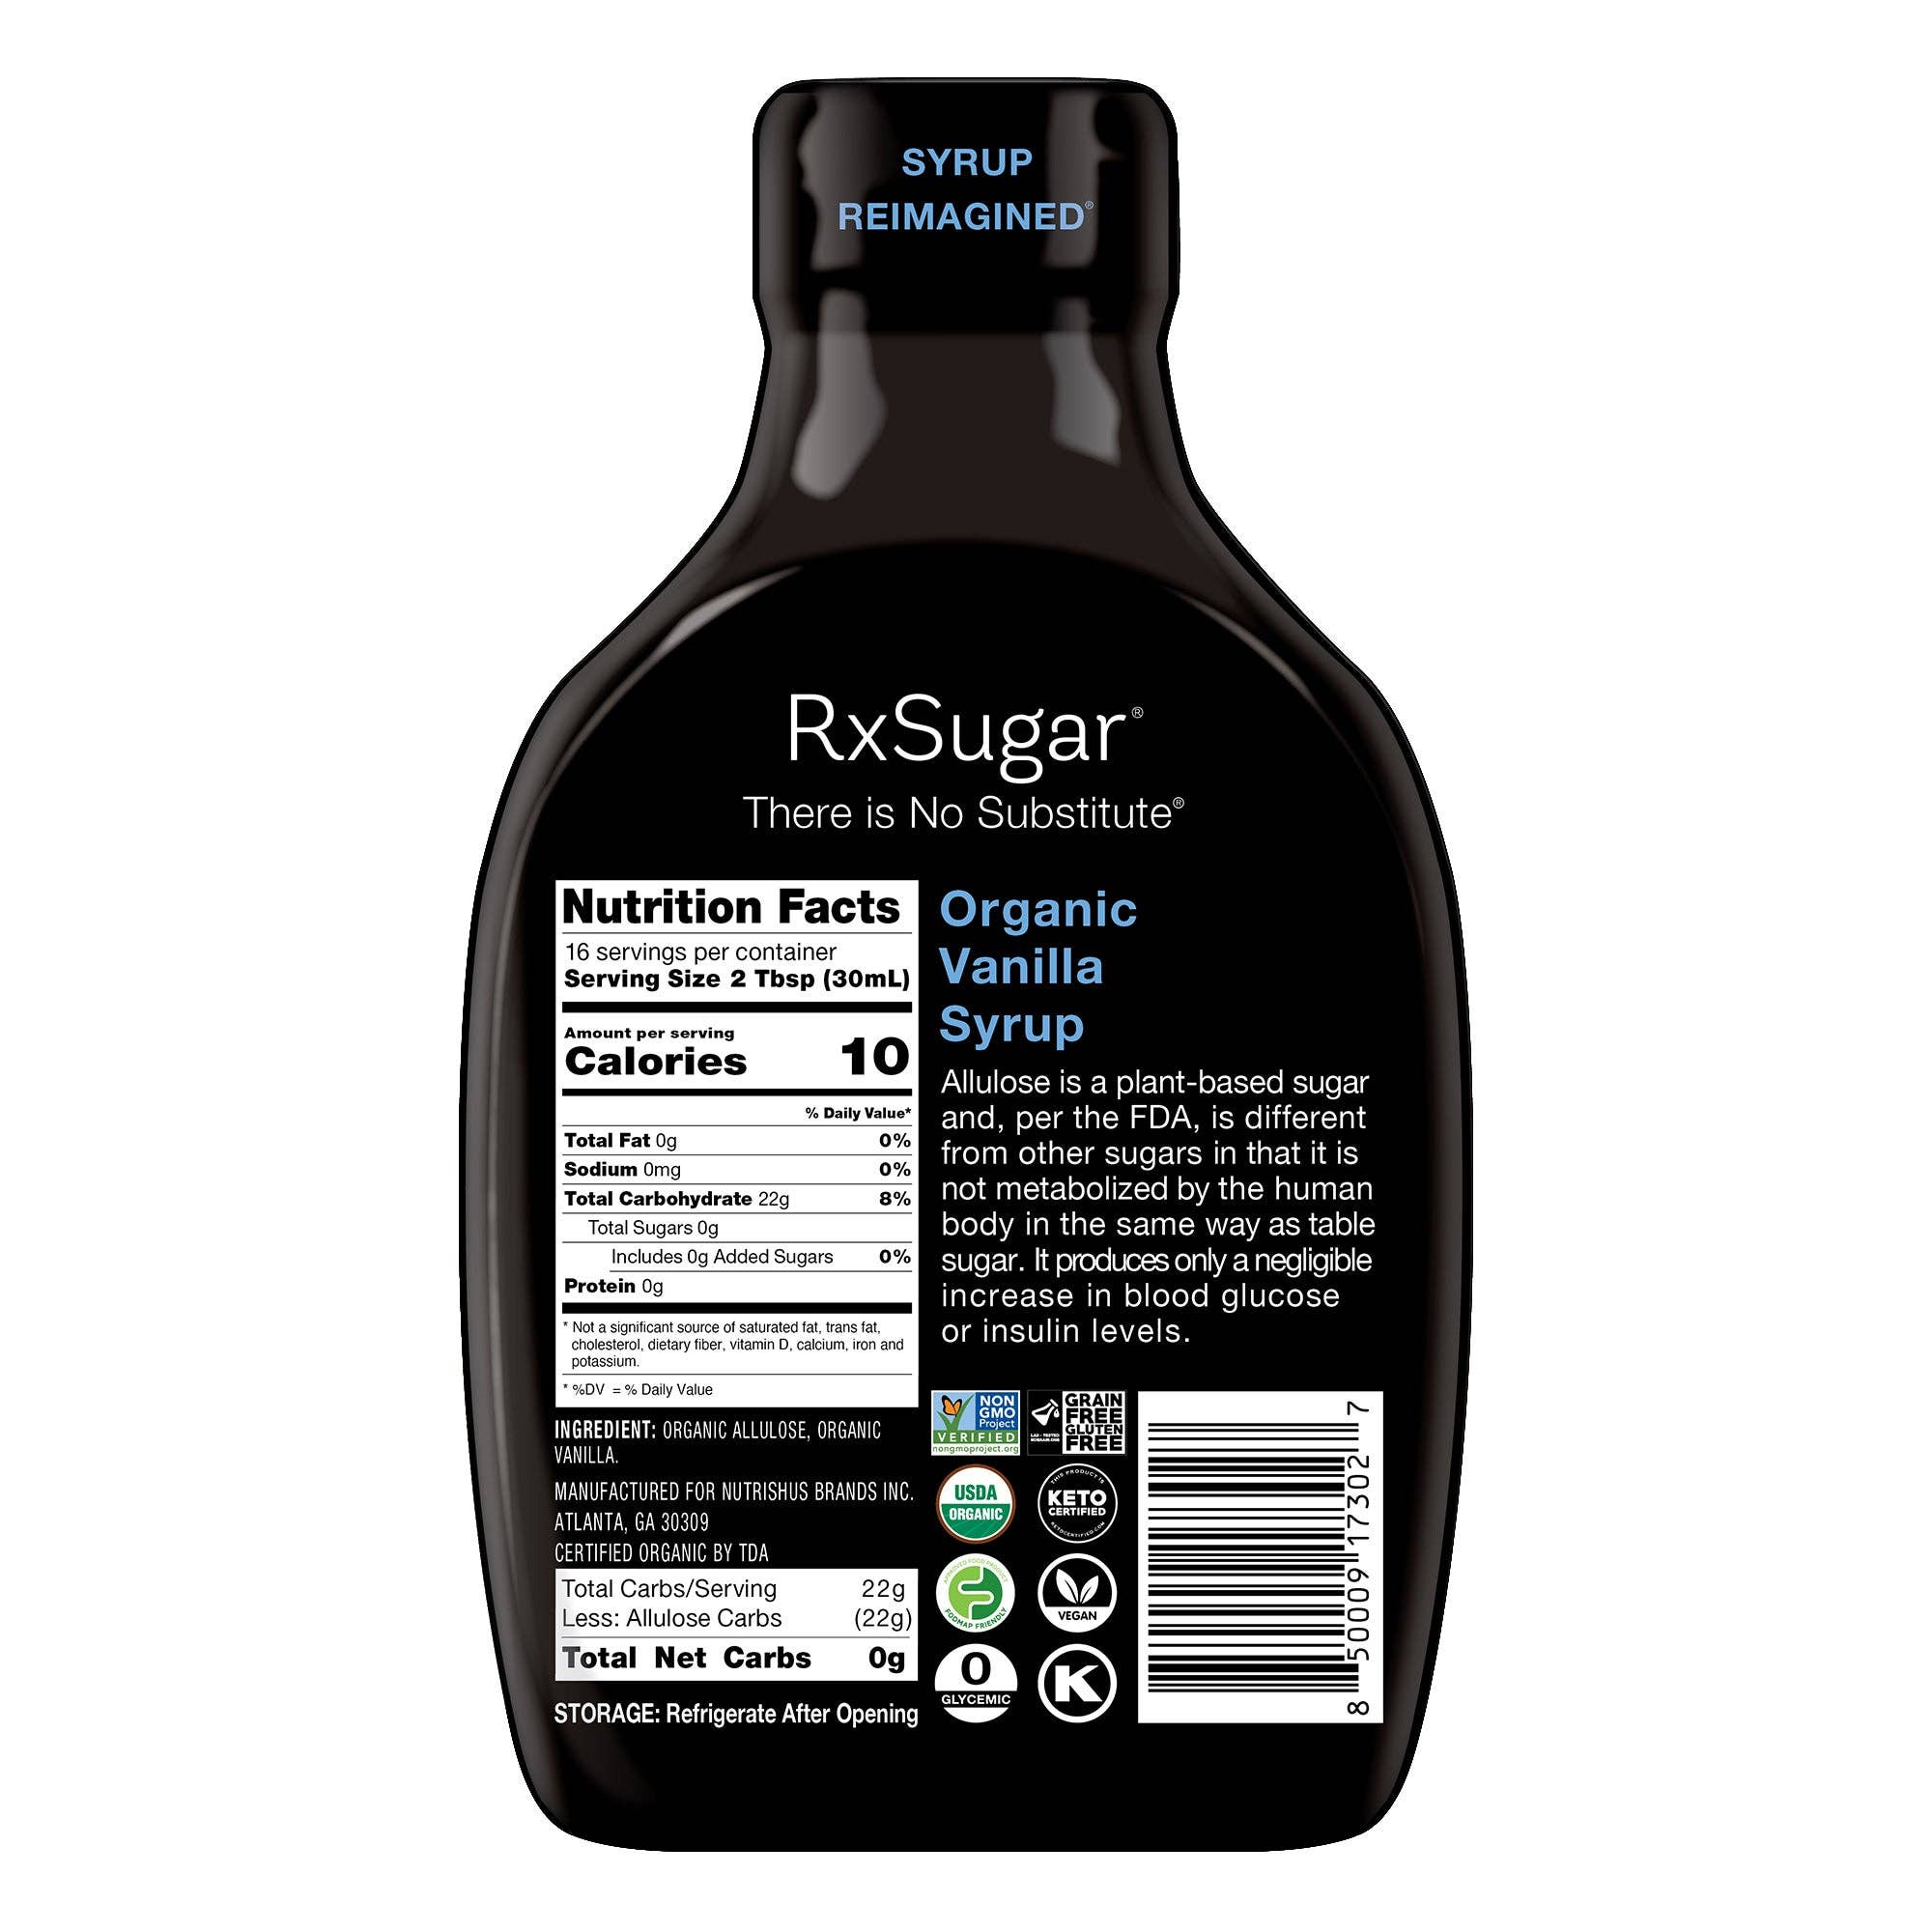 RxSugar® Organic Vanilla Syrup